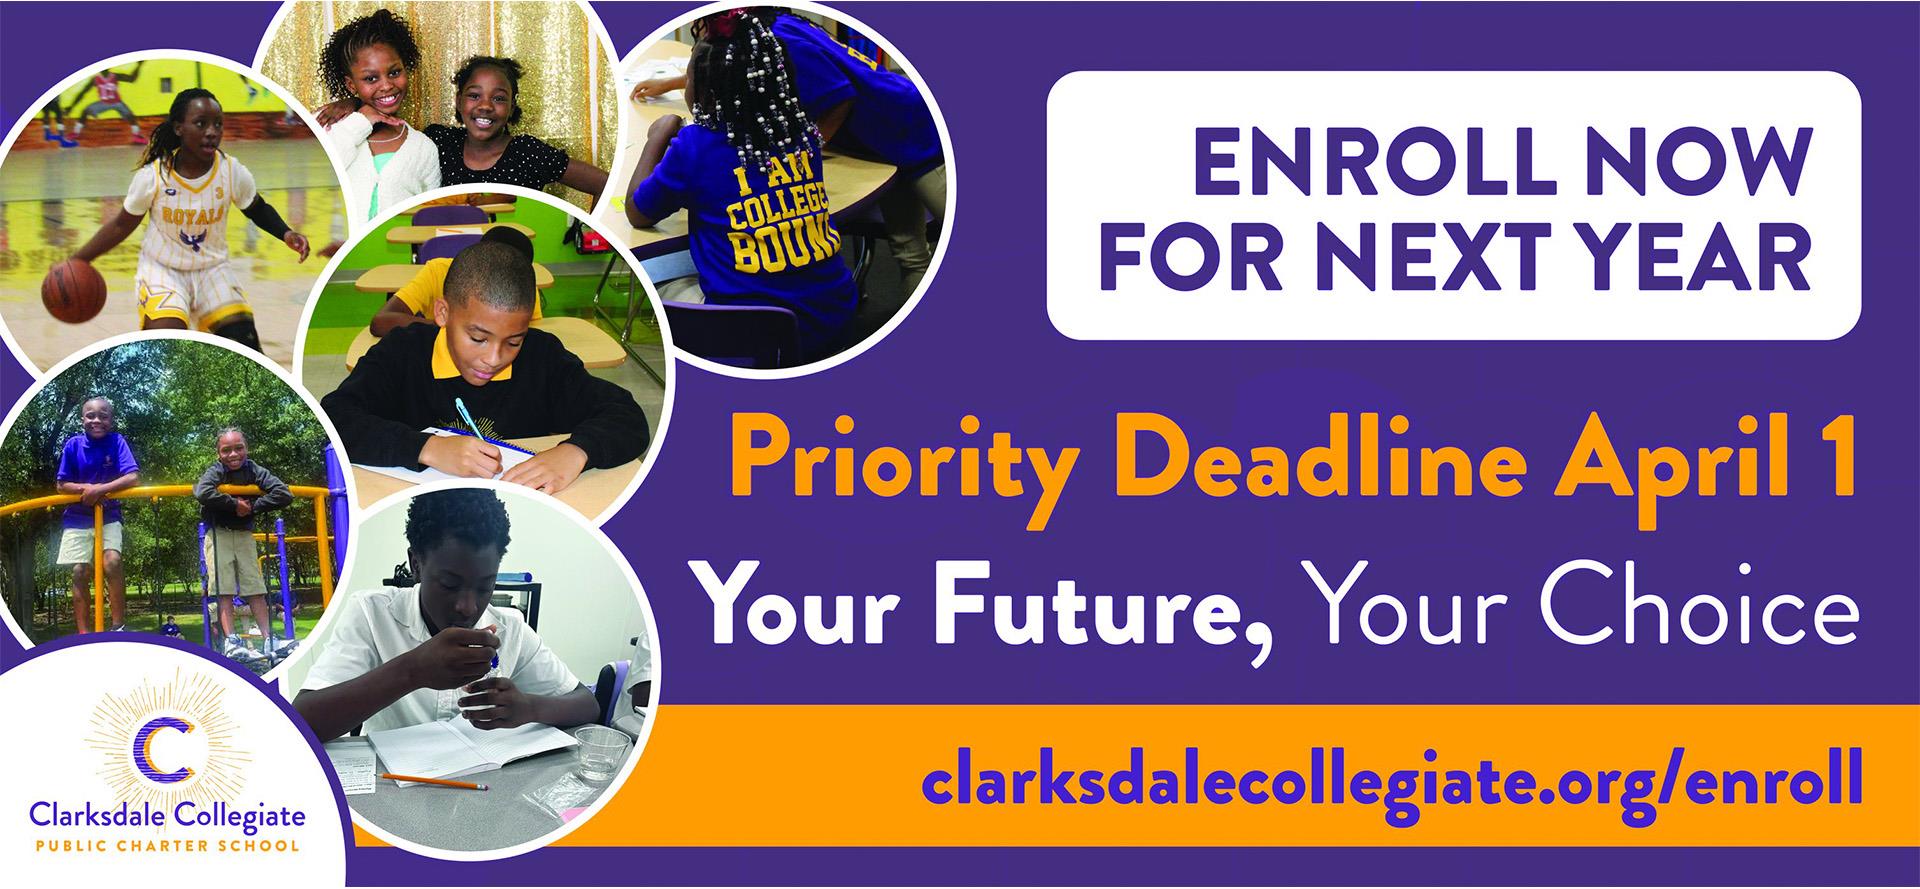 Enroll clarkdsalecollegiate.org/enroll